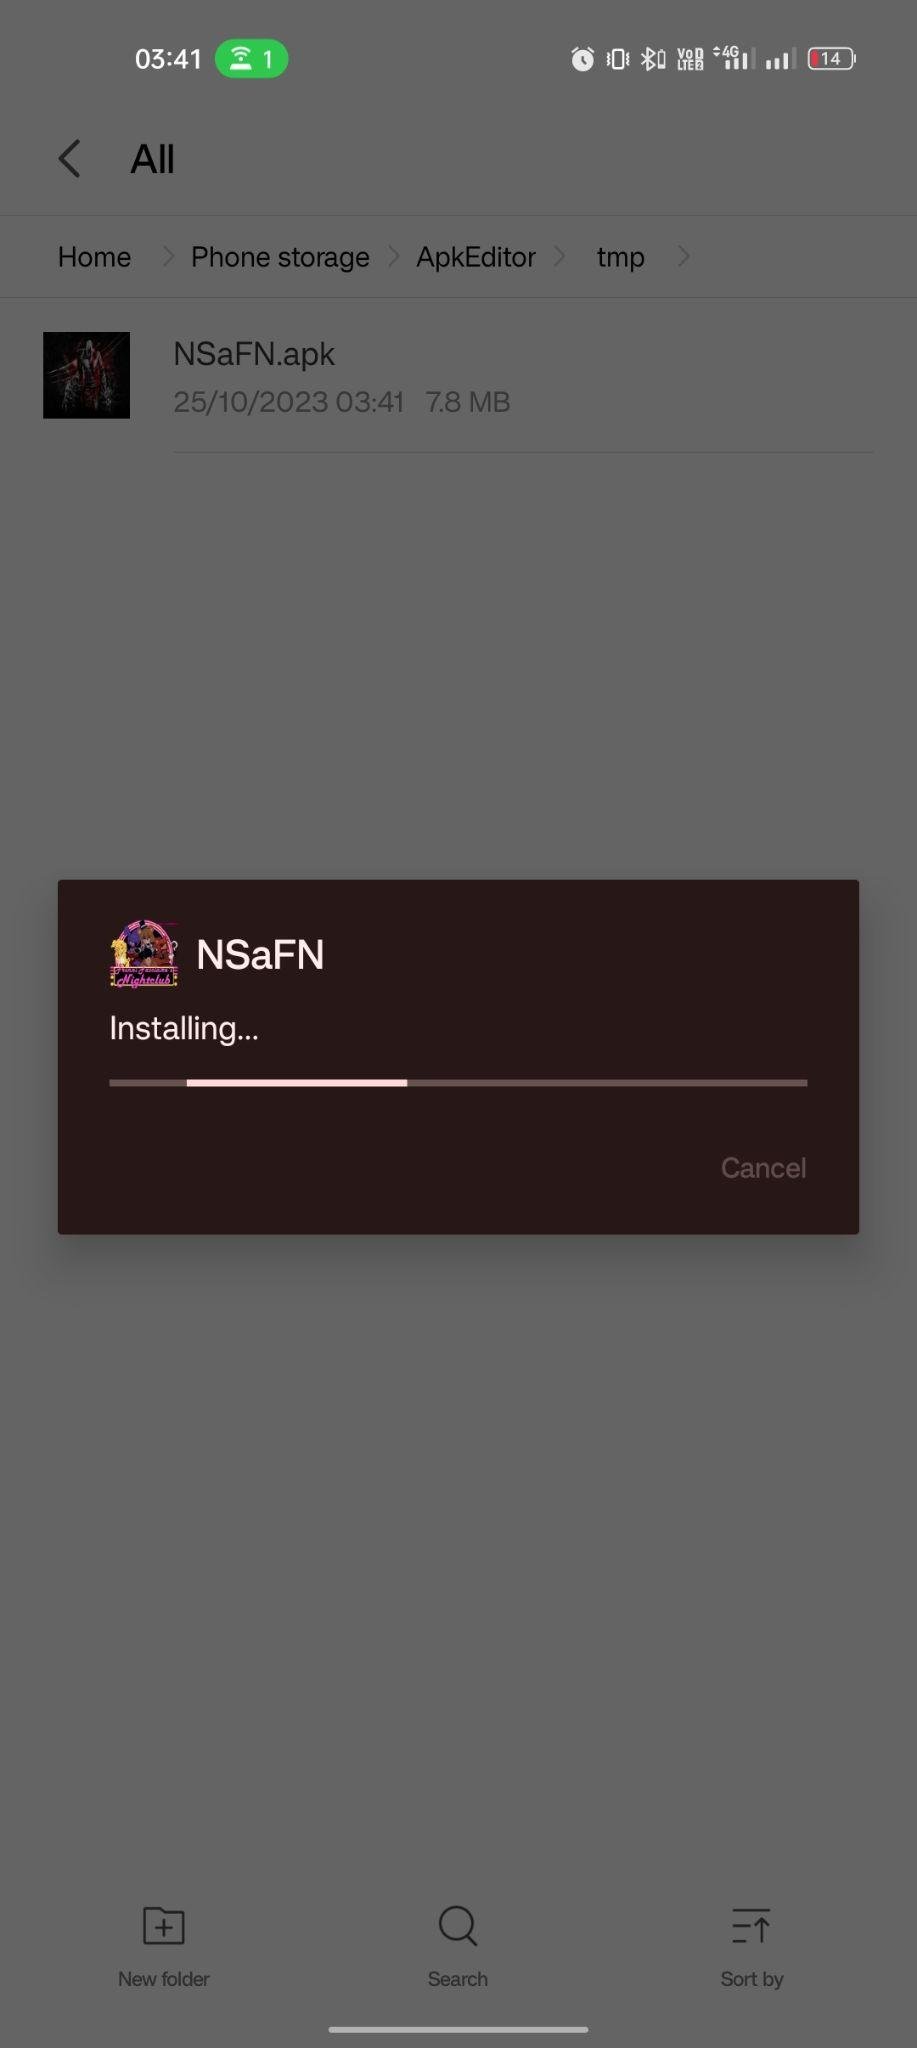 NSaFN apk installing